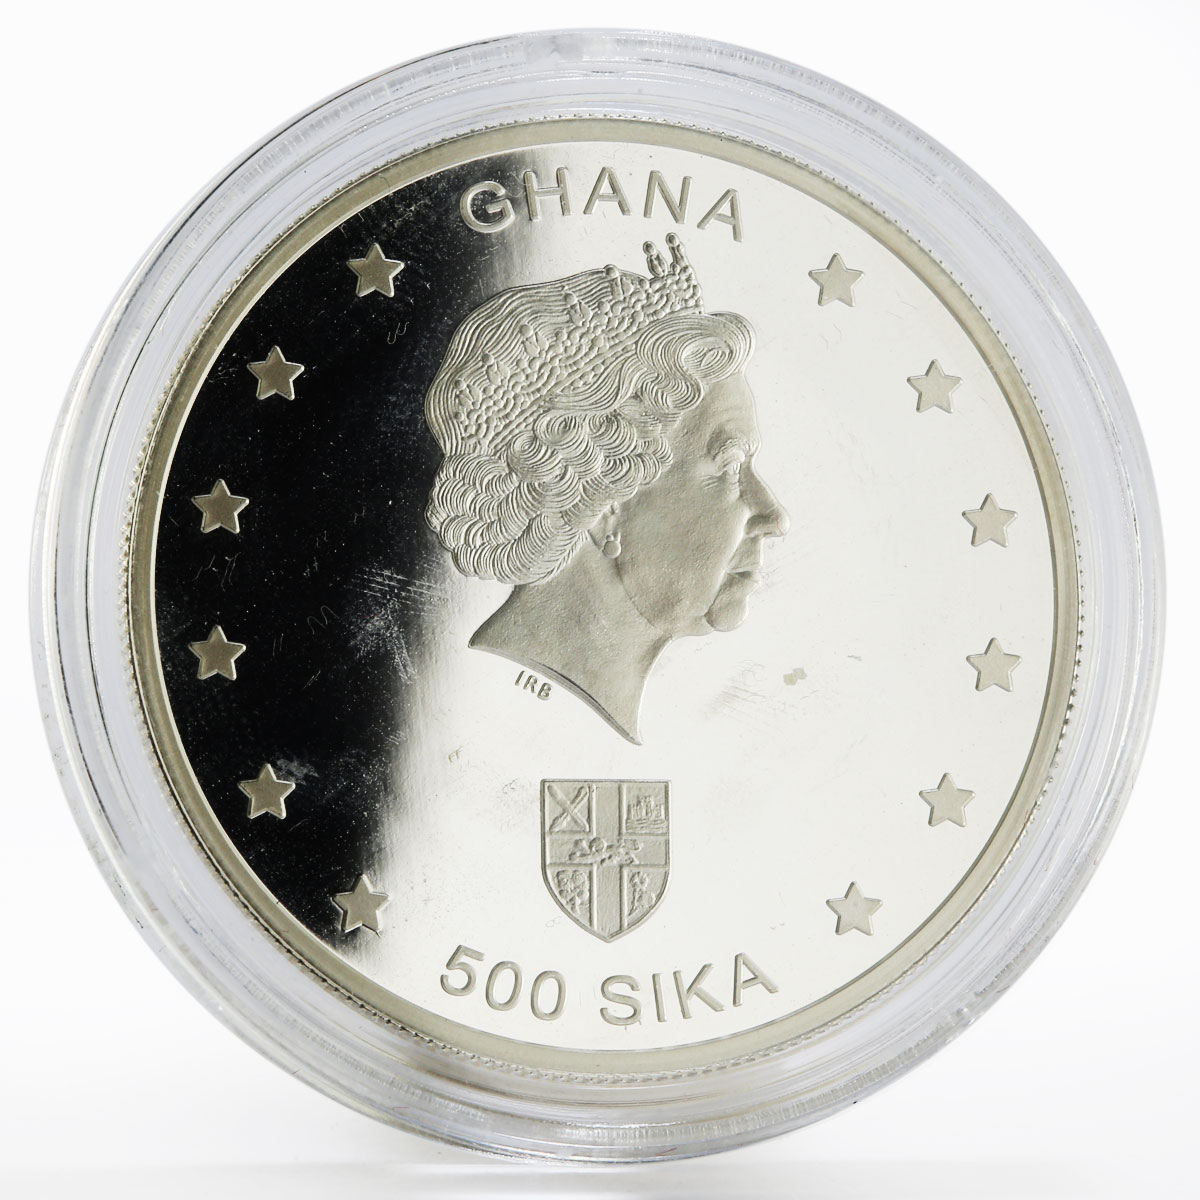 Ghana 500 sika World Championship of Football Dortmund Stadium silver coin 2006